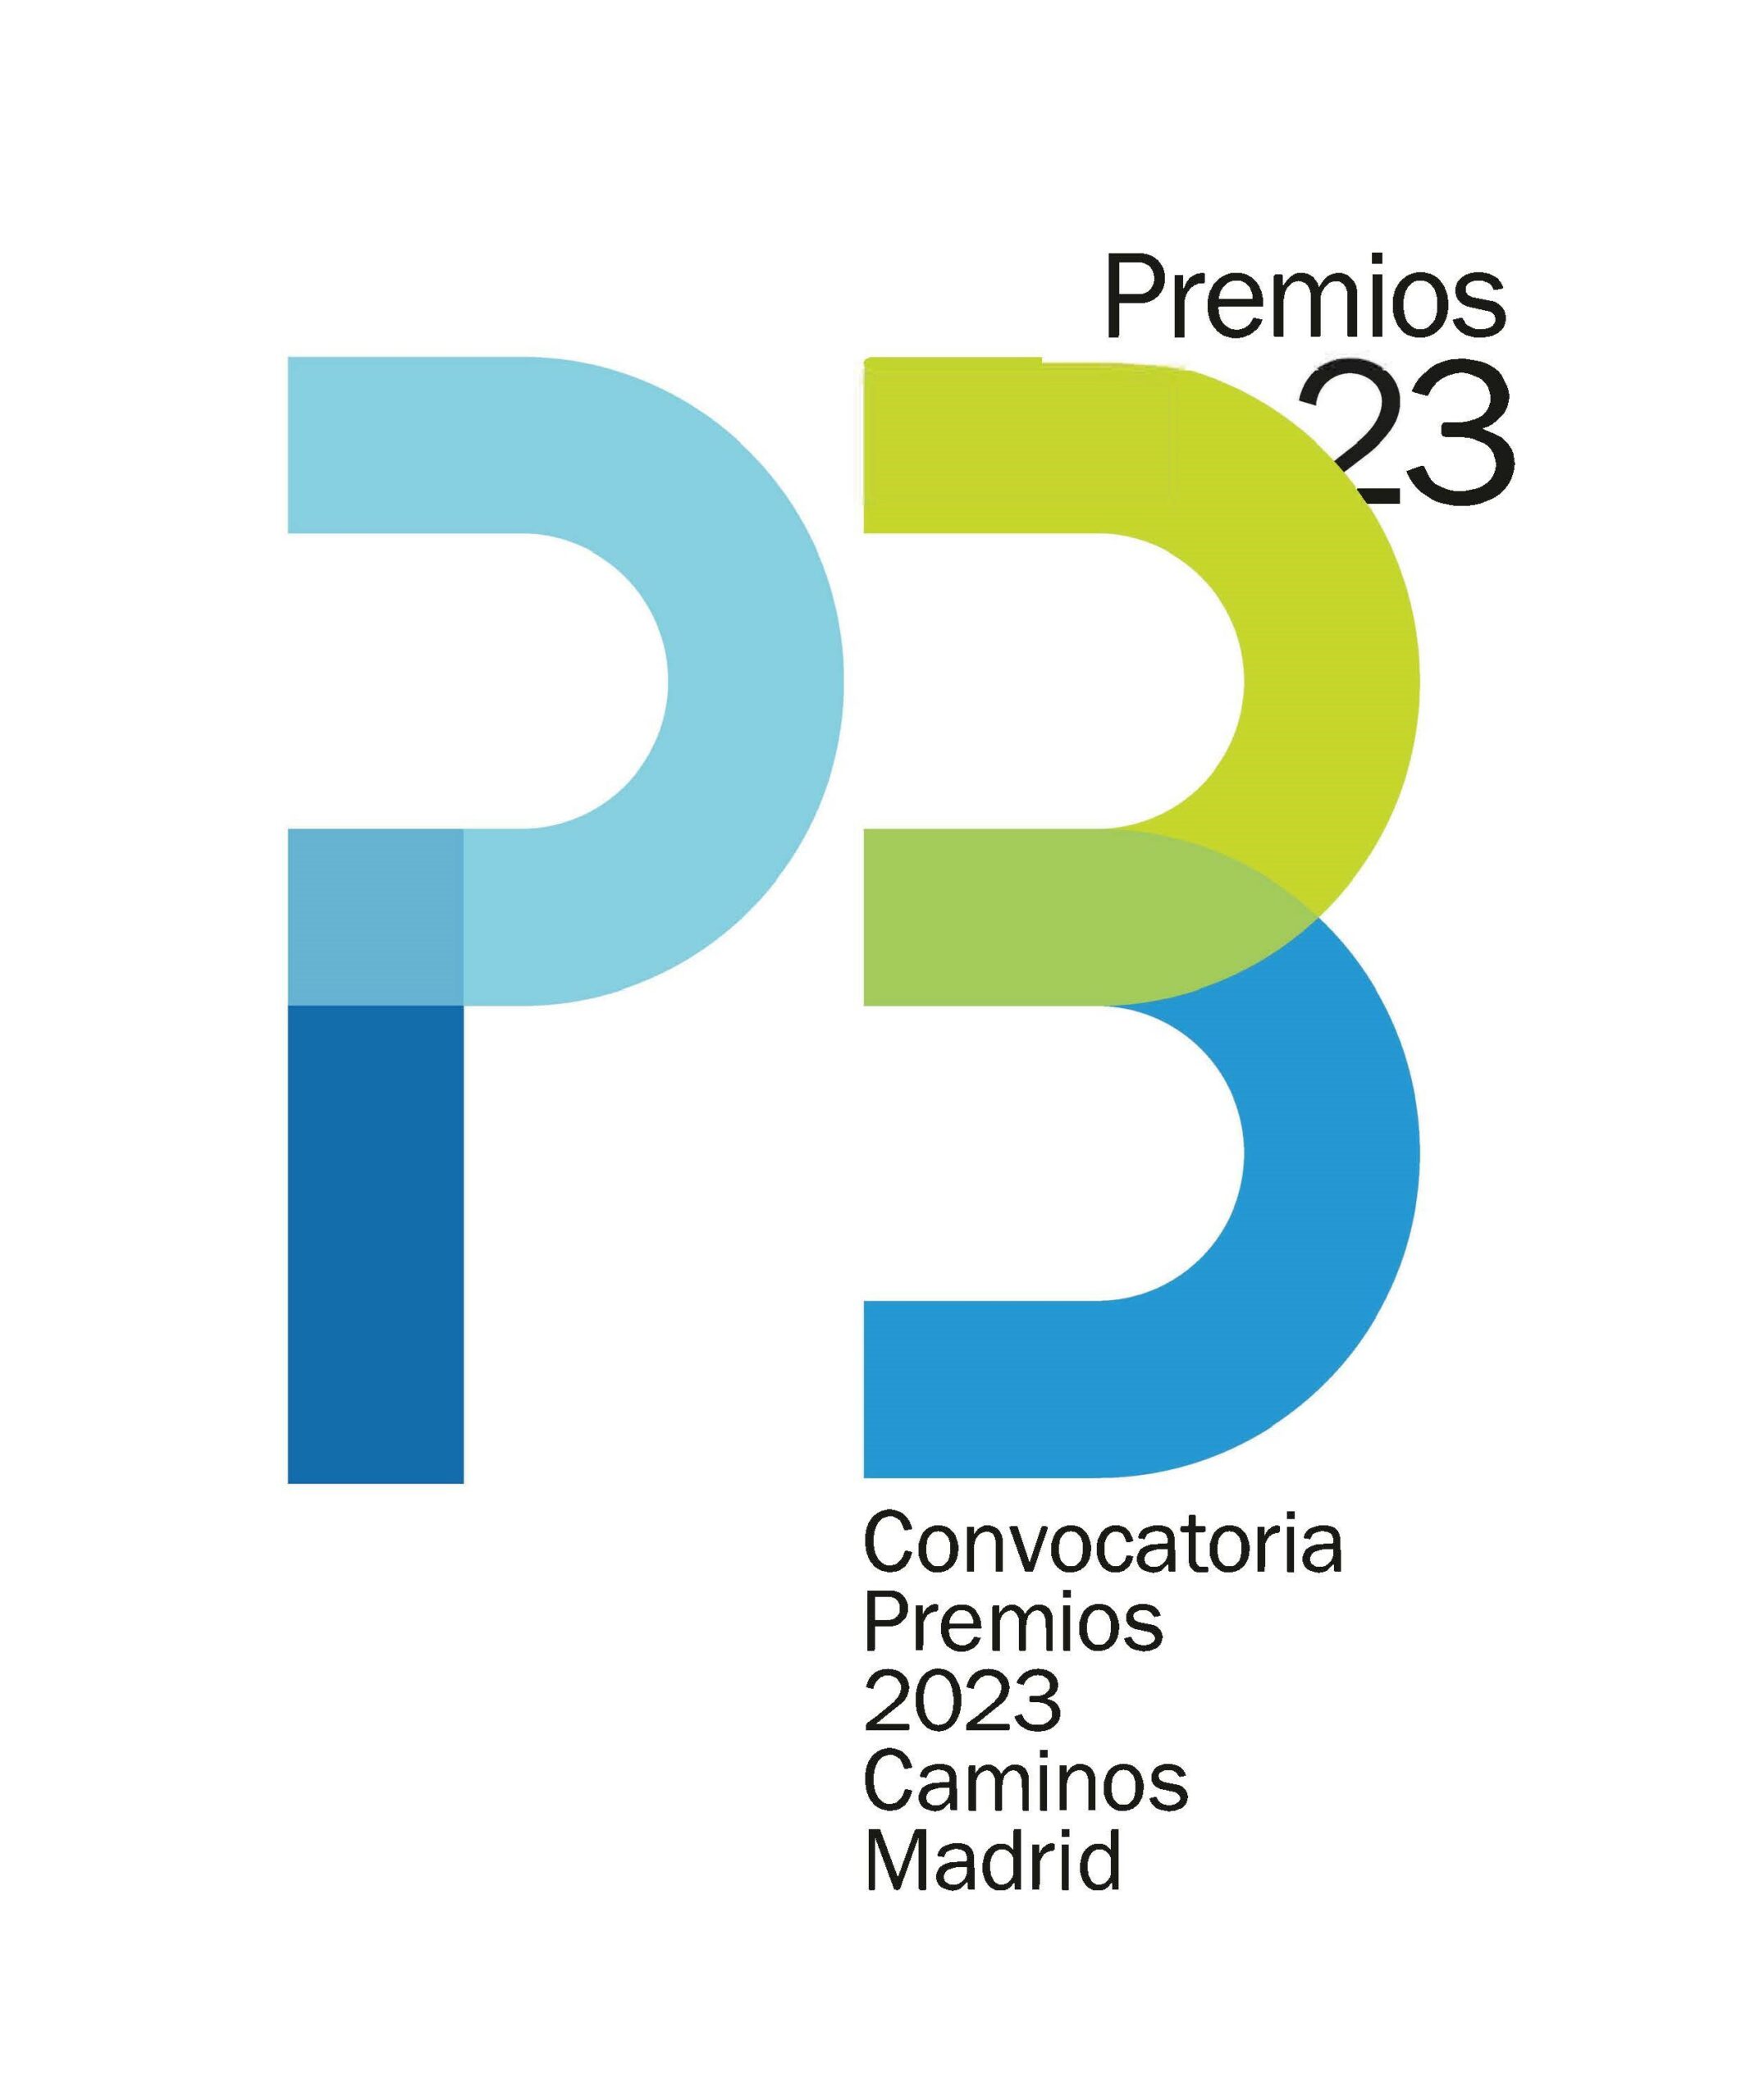 Convocatoria Premios 2023 Caminos Madrid